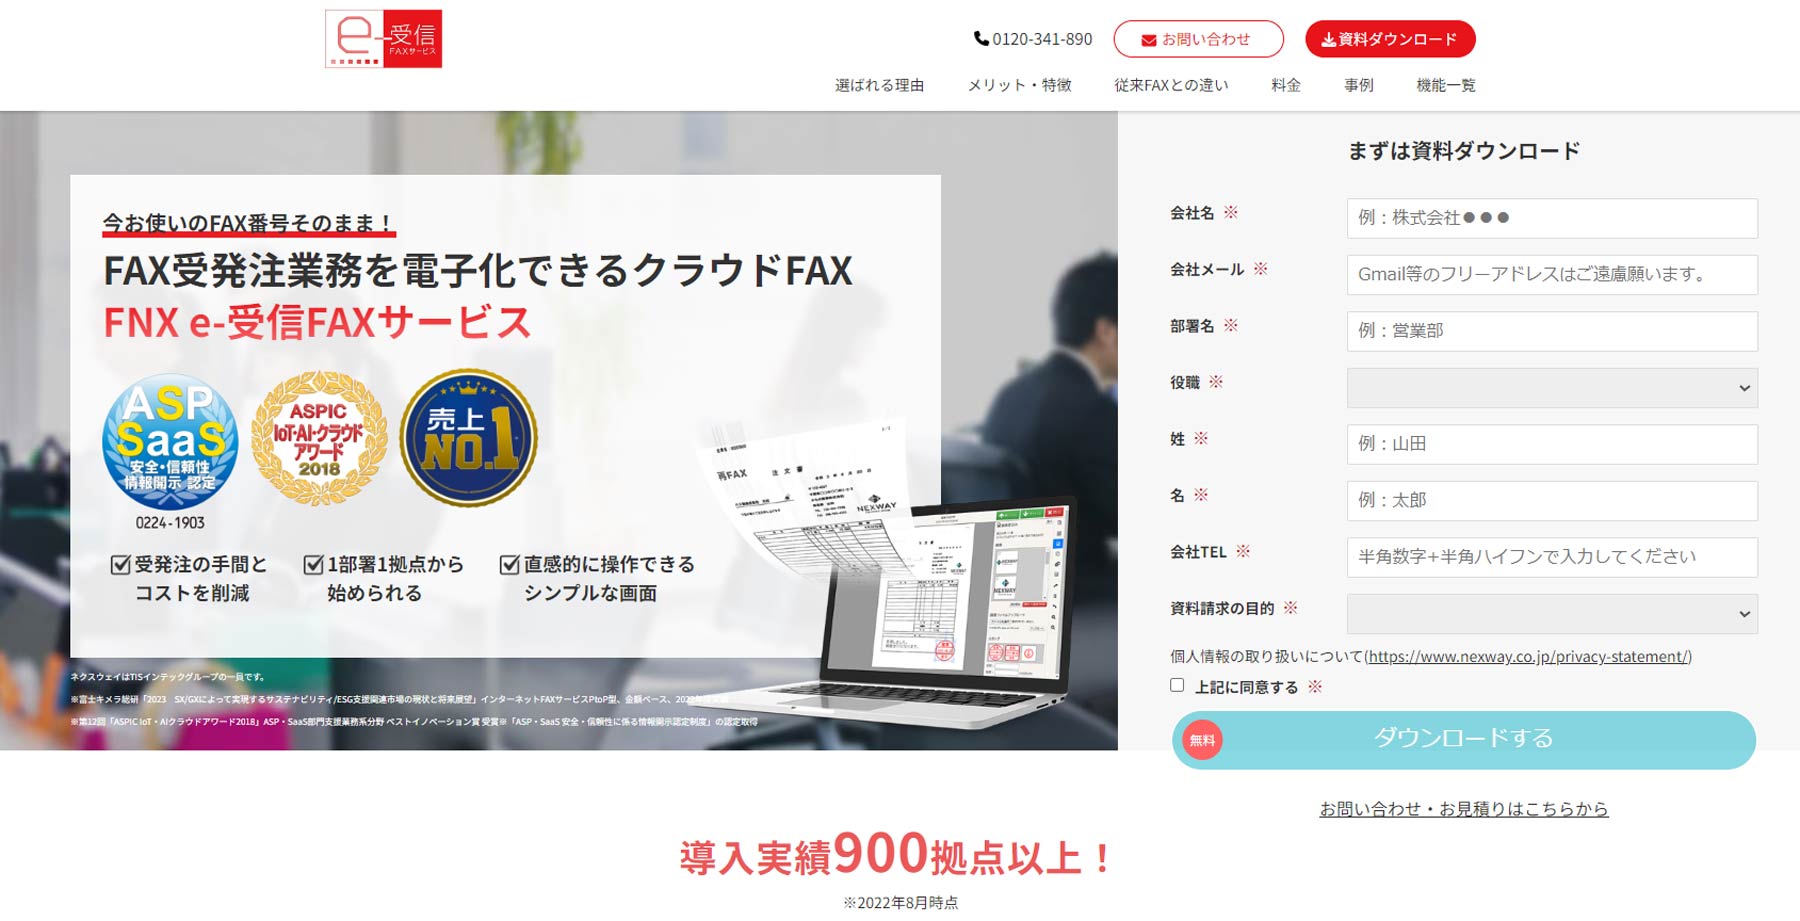 FNX e-受信FAXサービス公式Webサイト